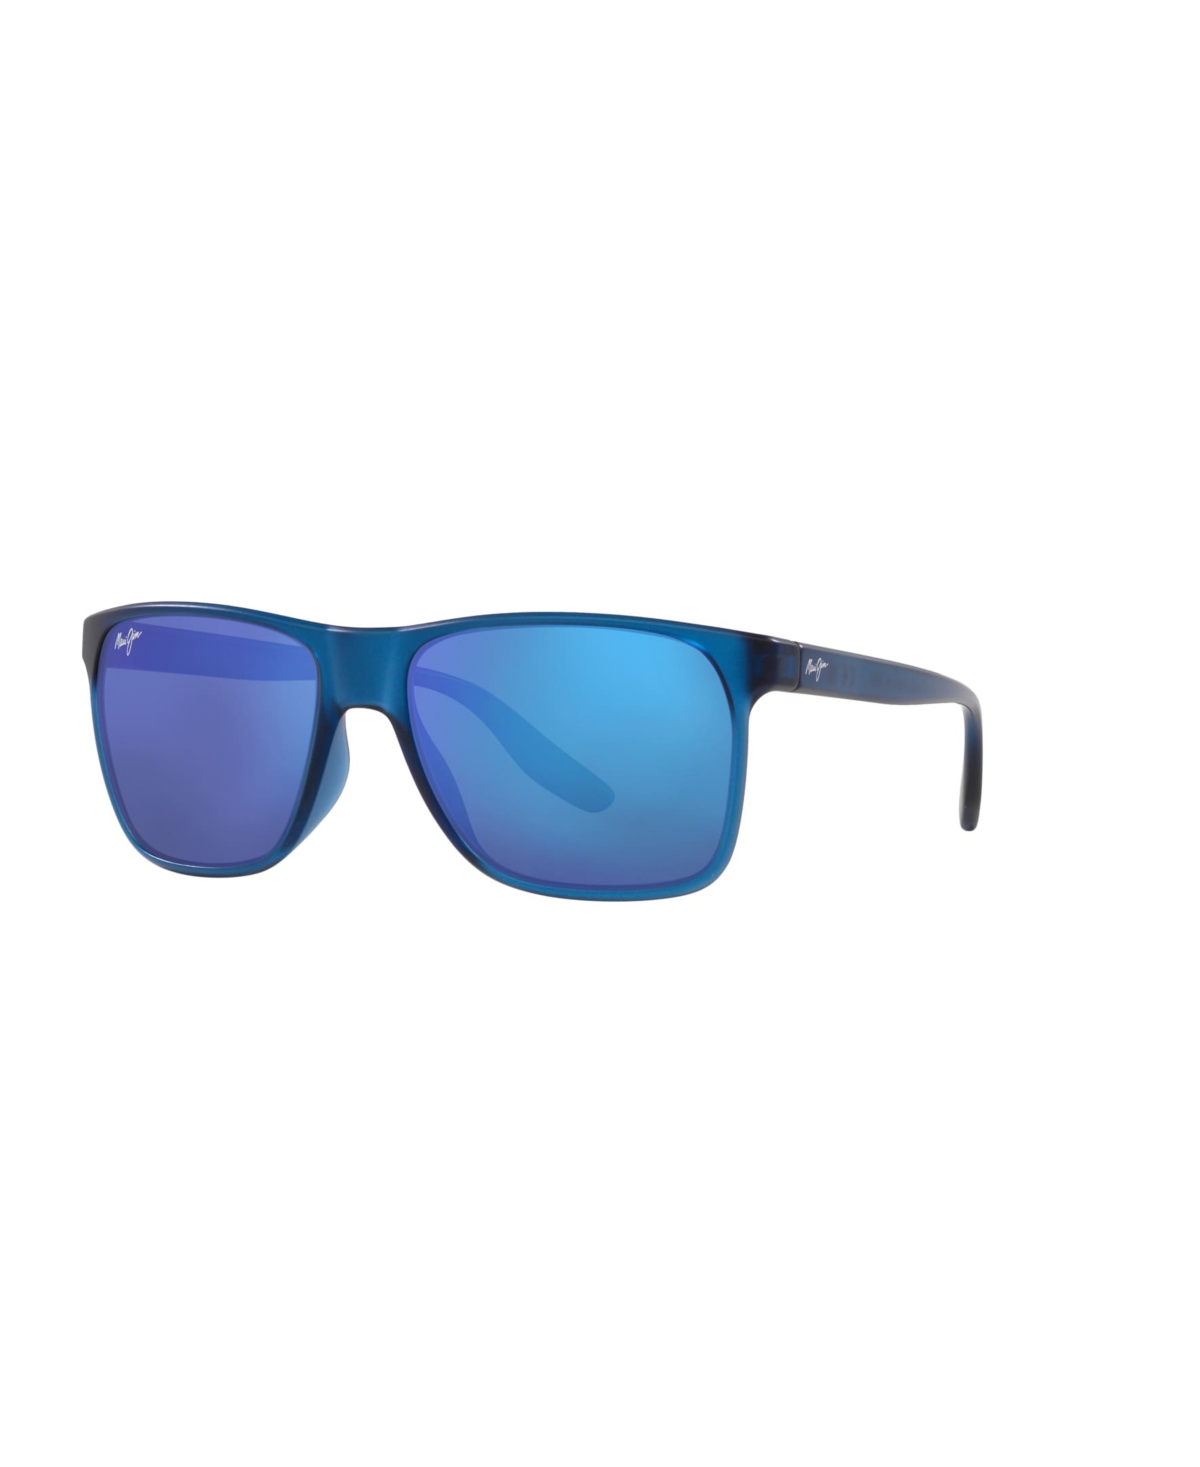 Men's Polarized Sunglasses, Pailolo Mj000692 - Gray Clear